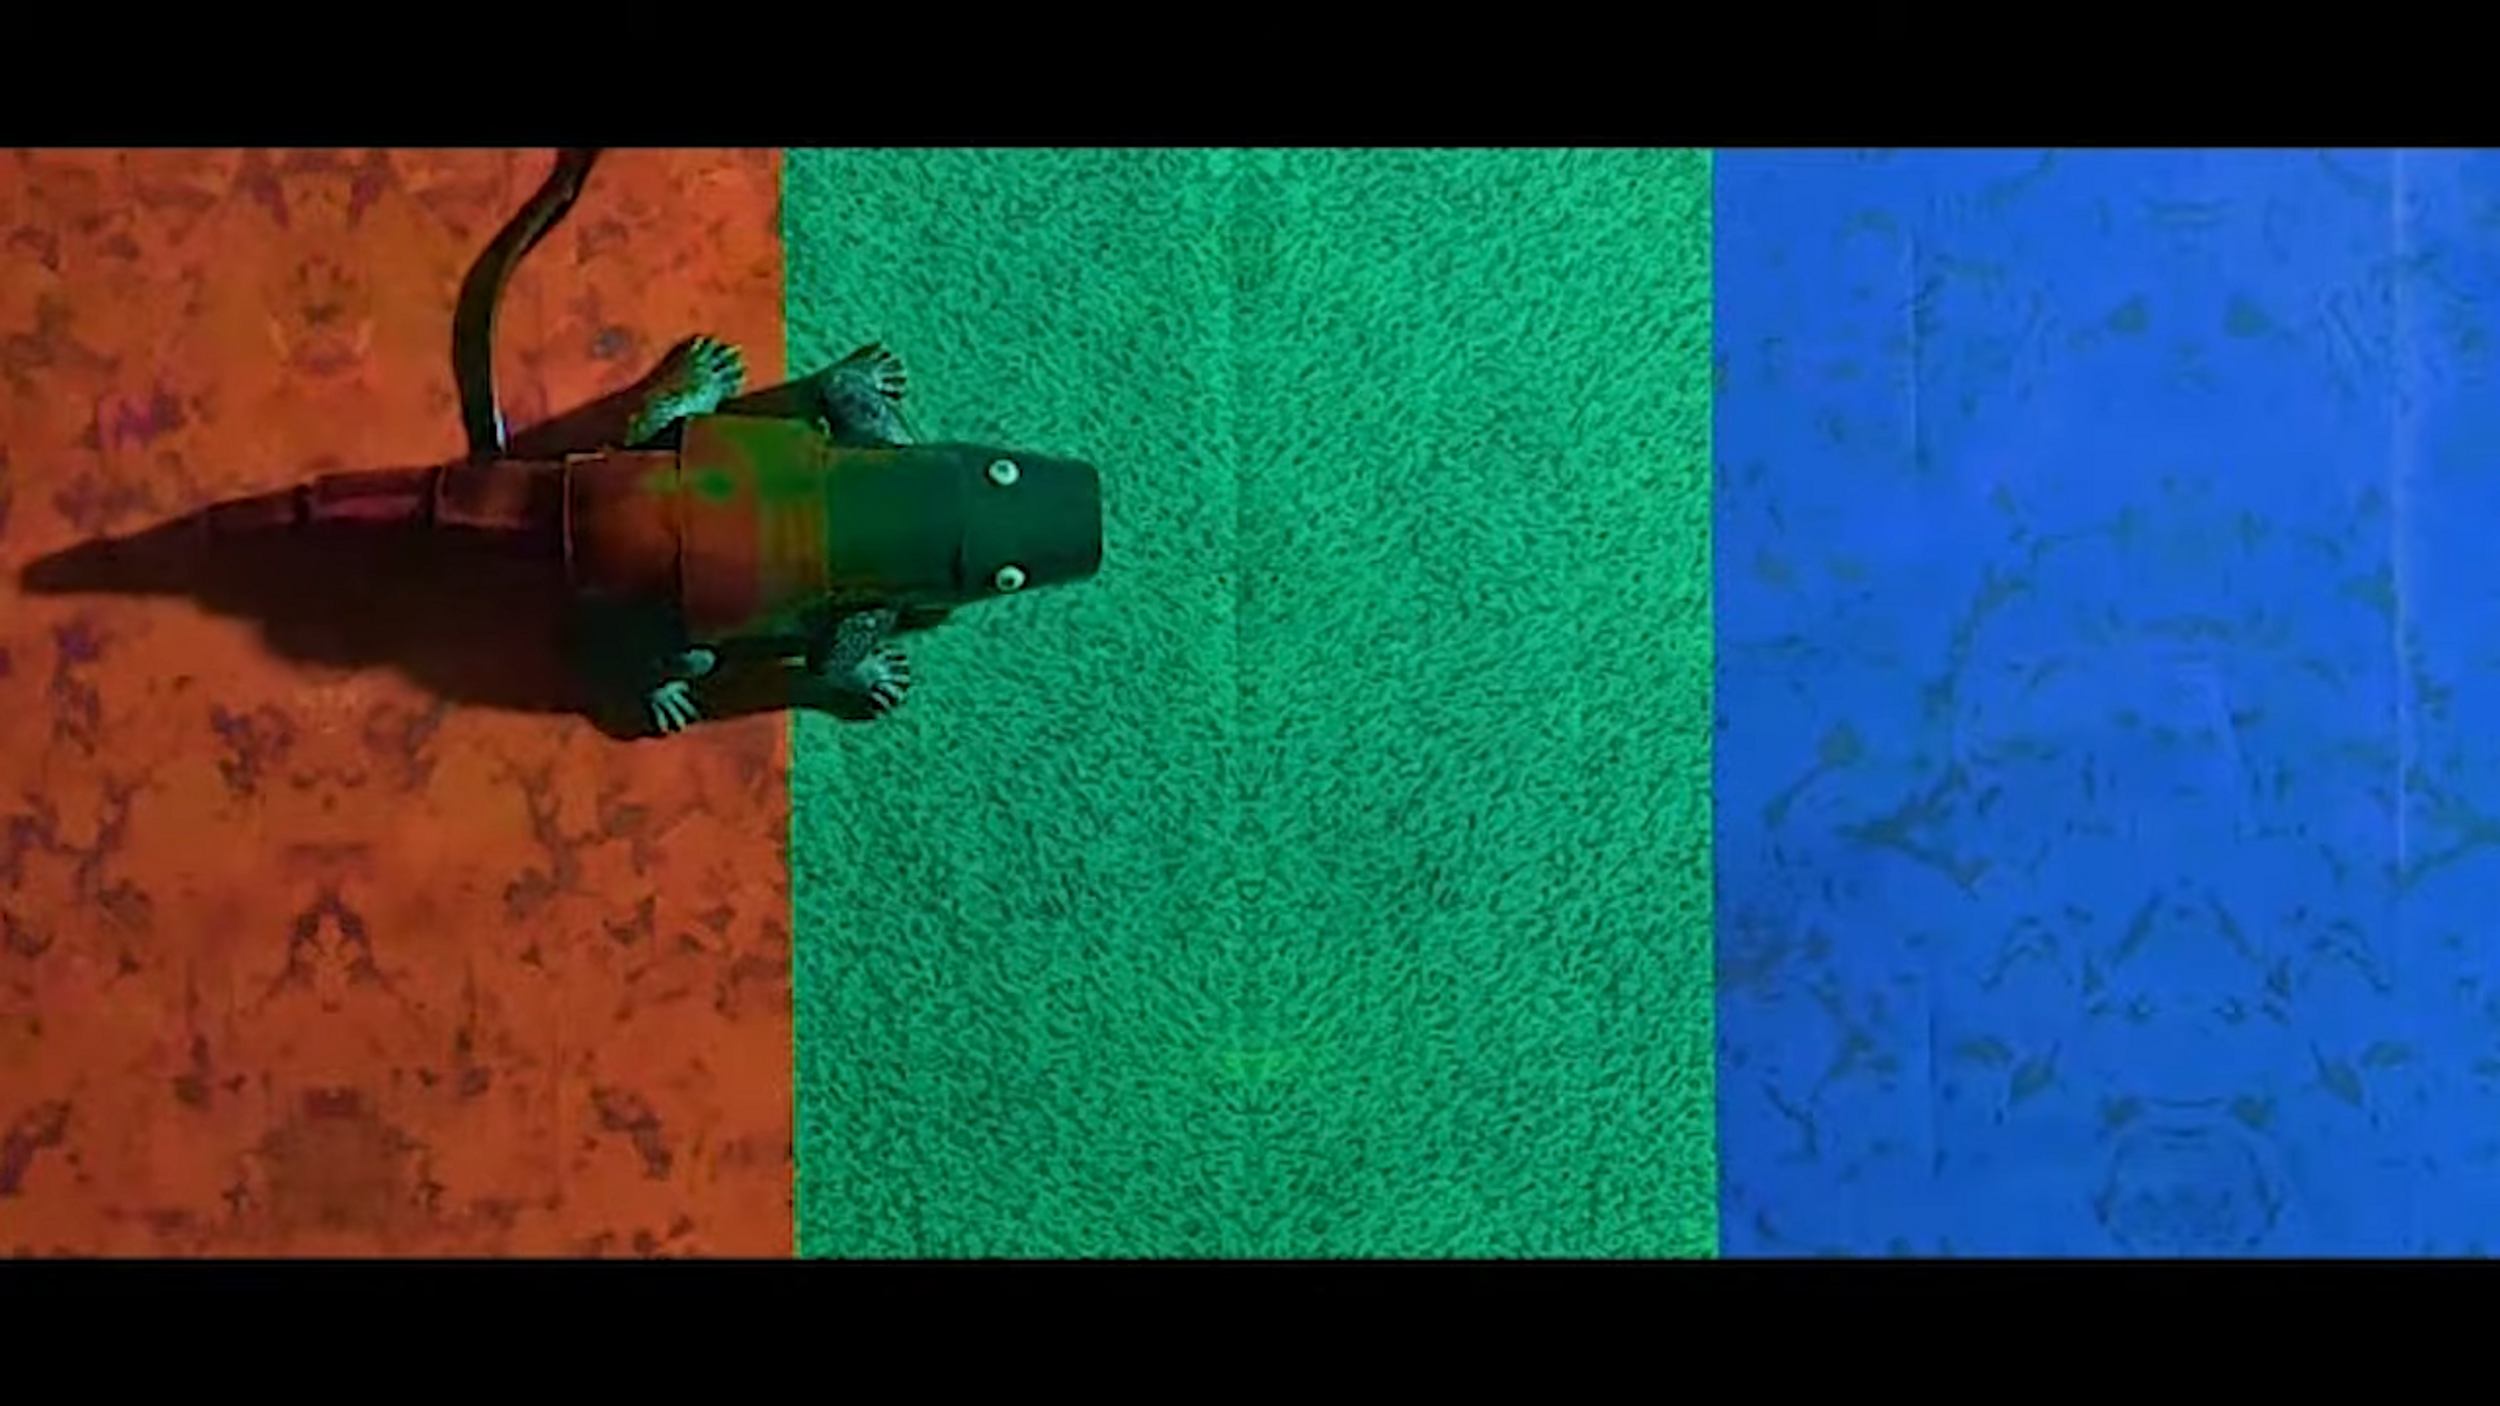 Chameleon robot walking and changing color